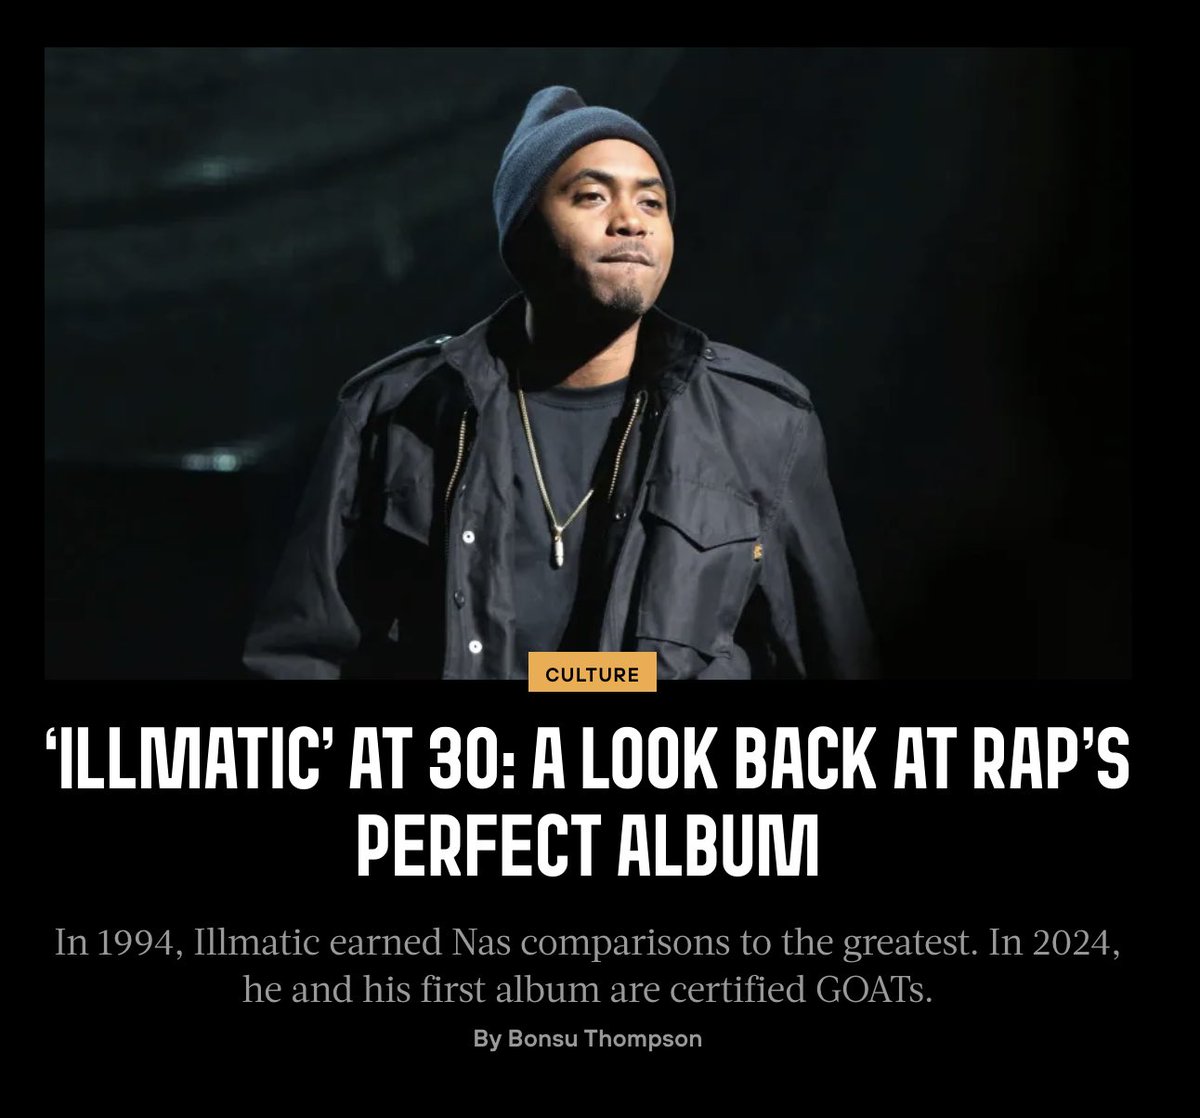 ‘Illmatic at 30: A look back at rap’s perfect album’ 

📝 by @DreamzRreal 

Read: bit.ly/NasIllmaticat30